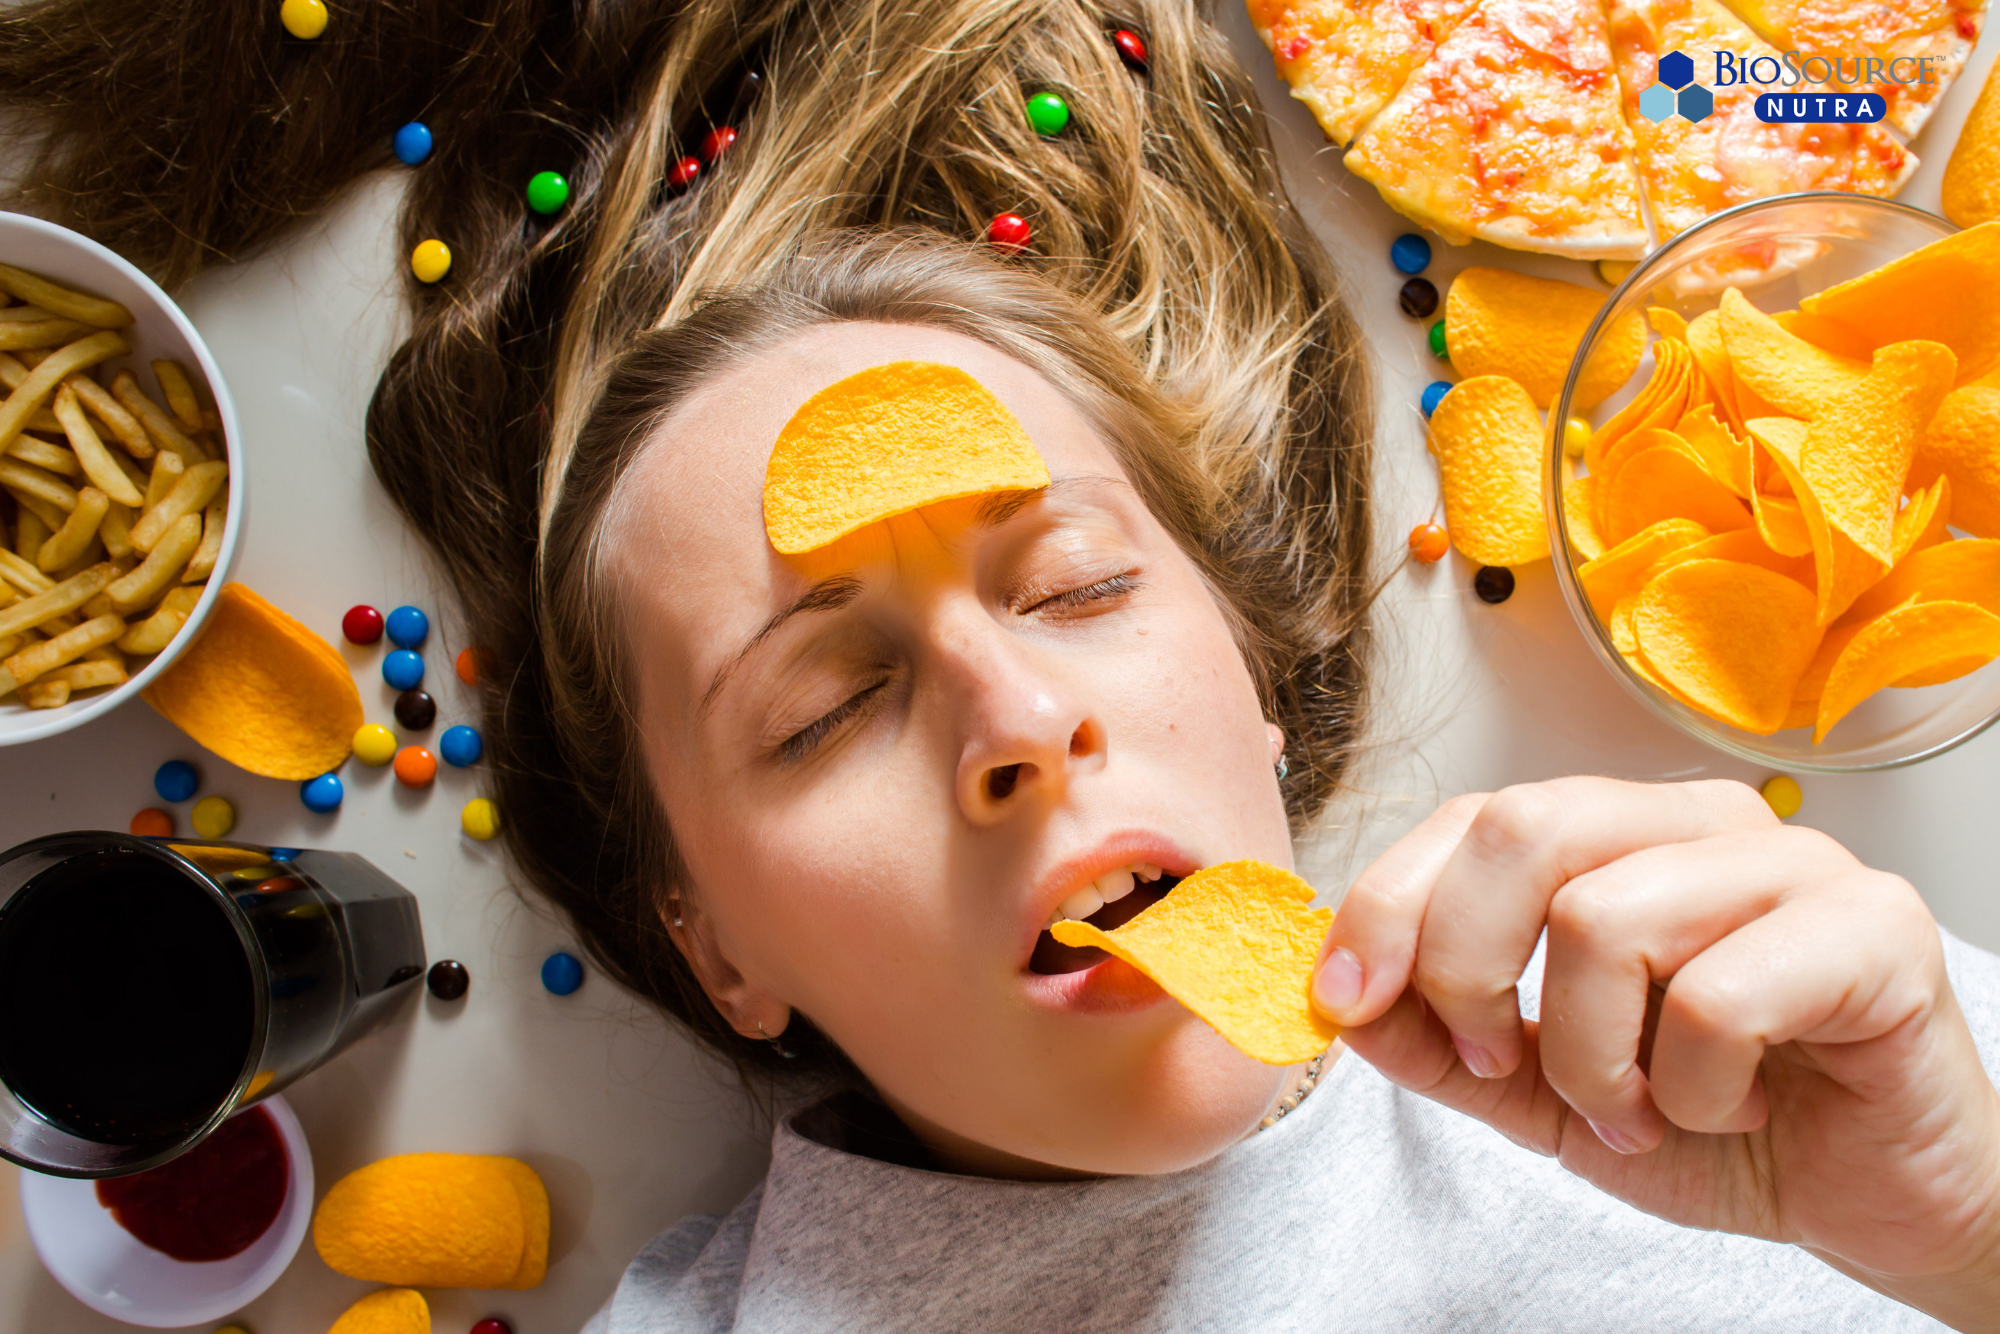 A woman binge-eating processed foods